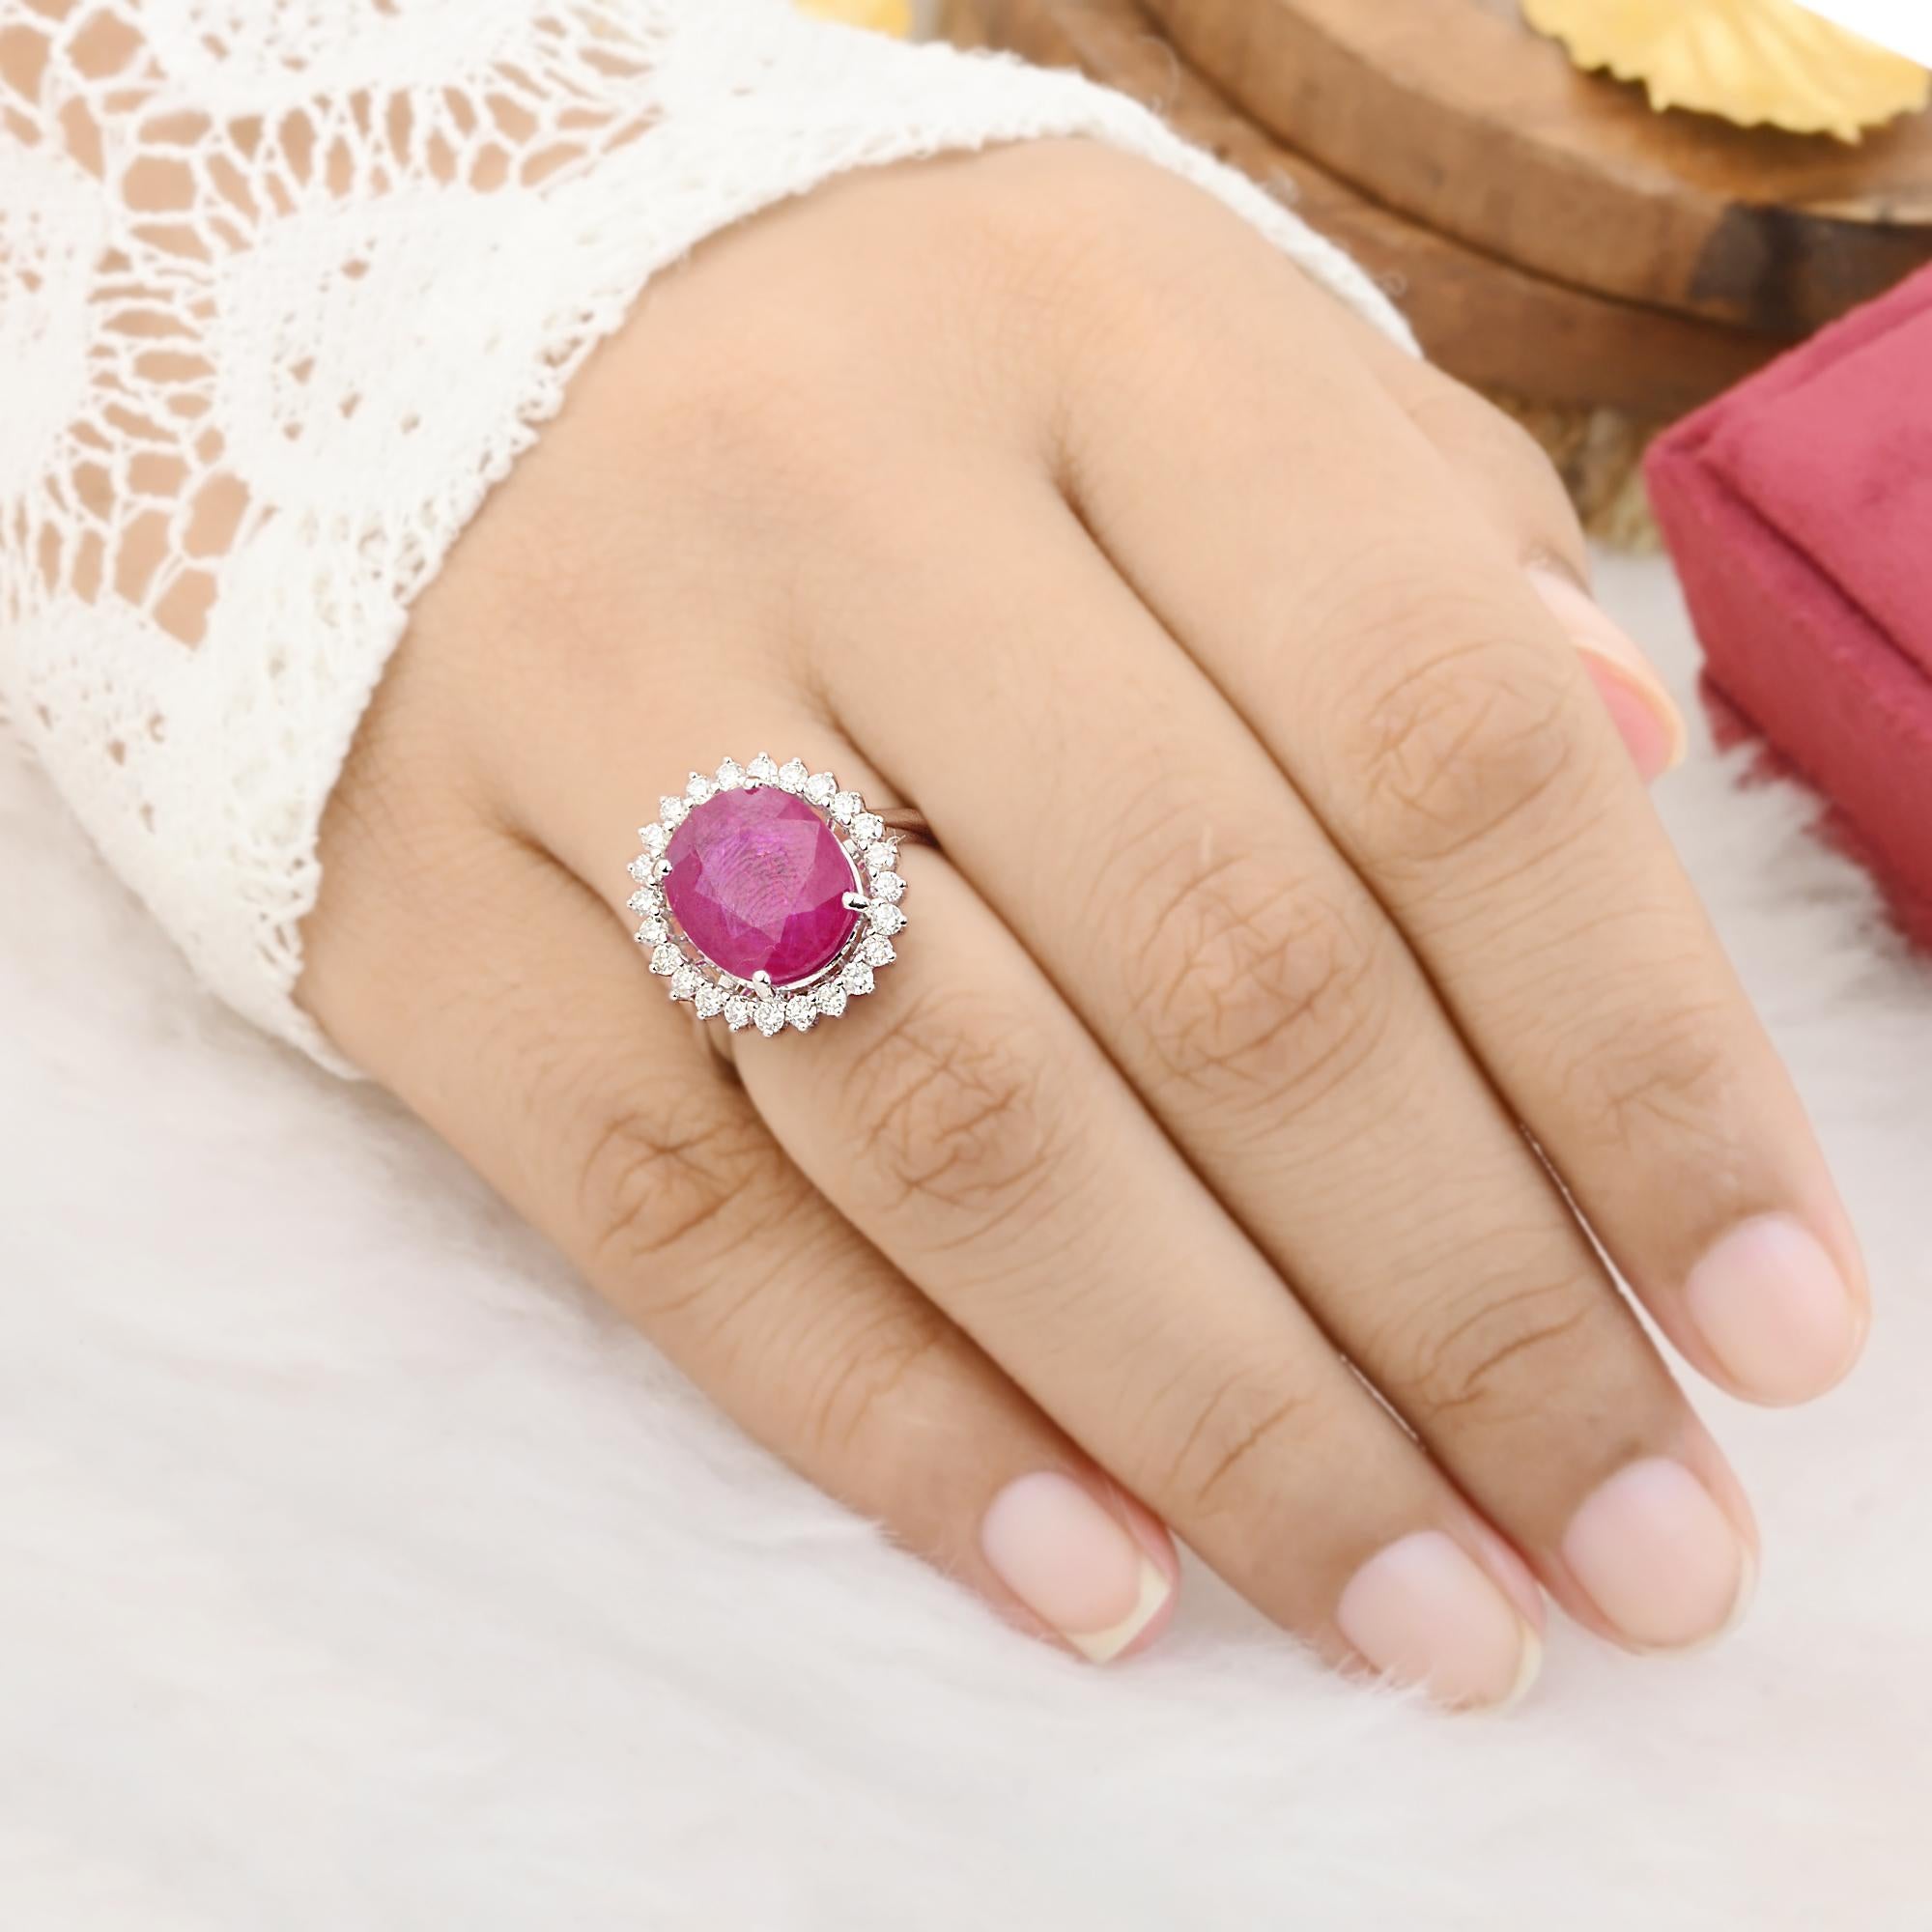 Women's Oval Ruby Gemstone Cocktail Ring Diamond 10 Karat White Gold Handmade Jewelry For Sale